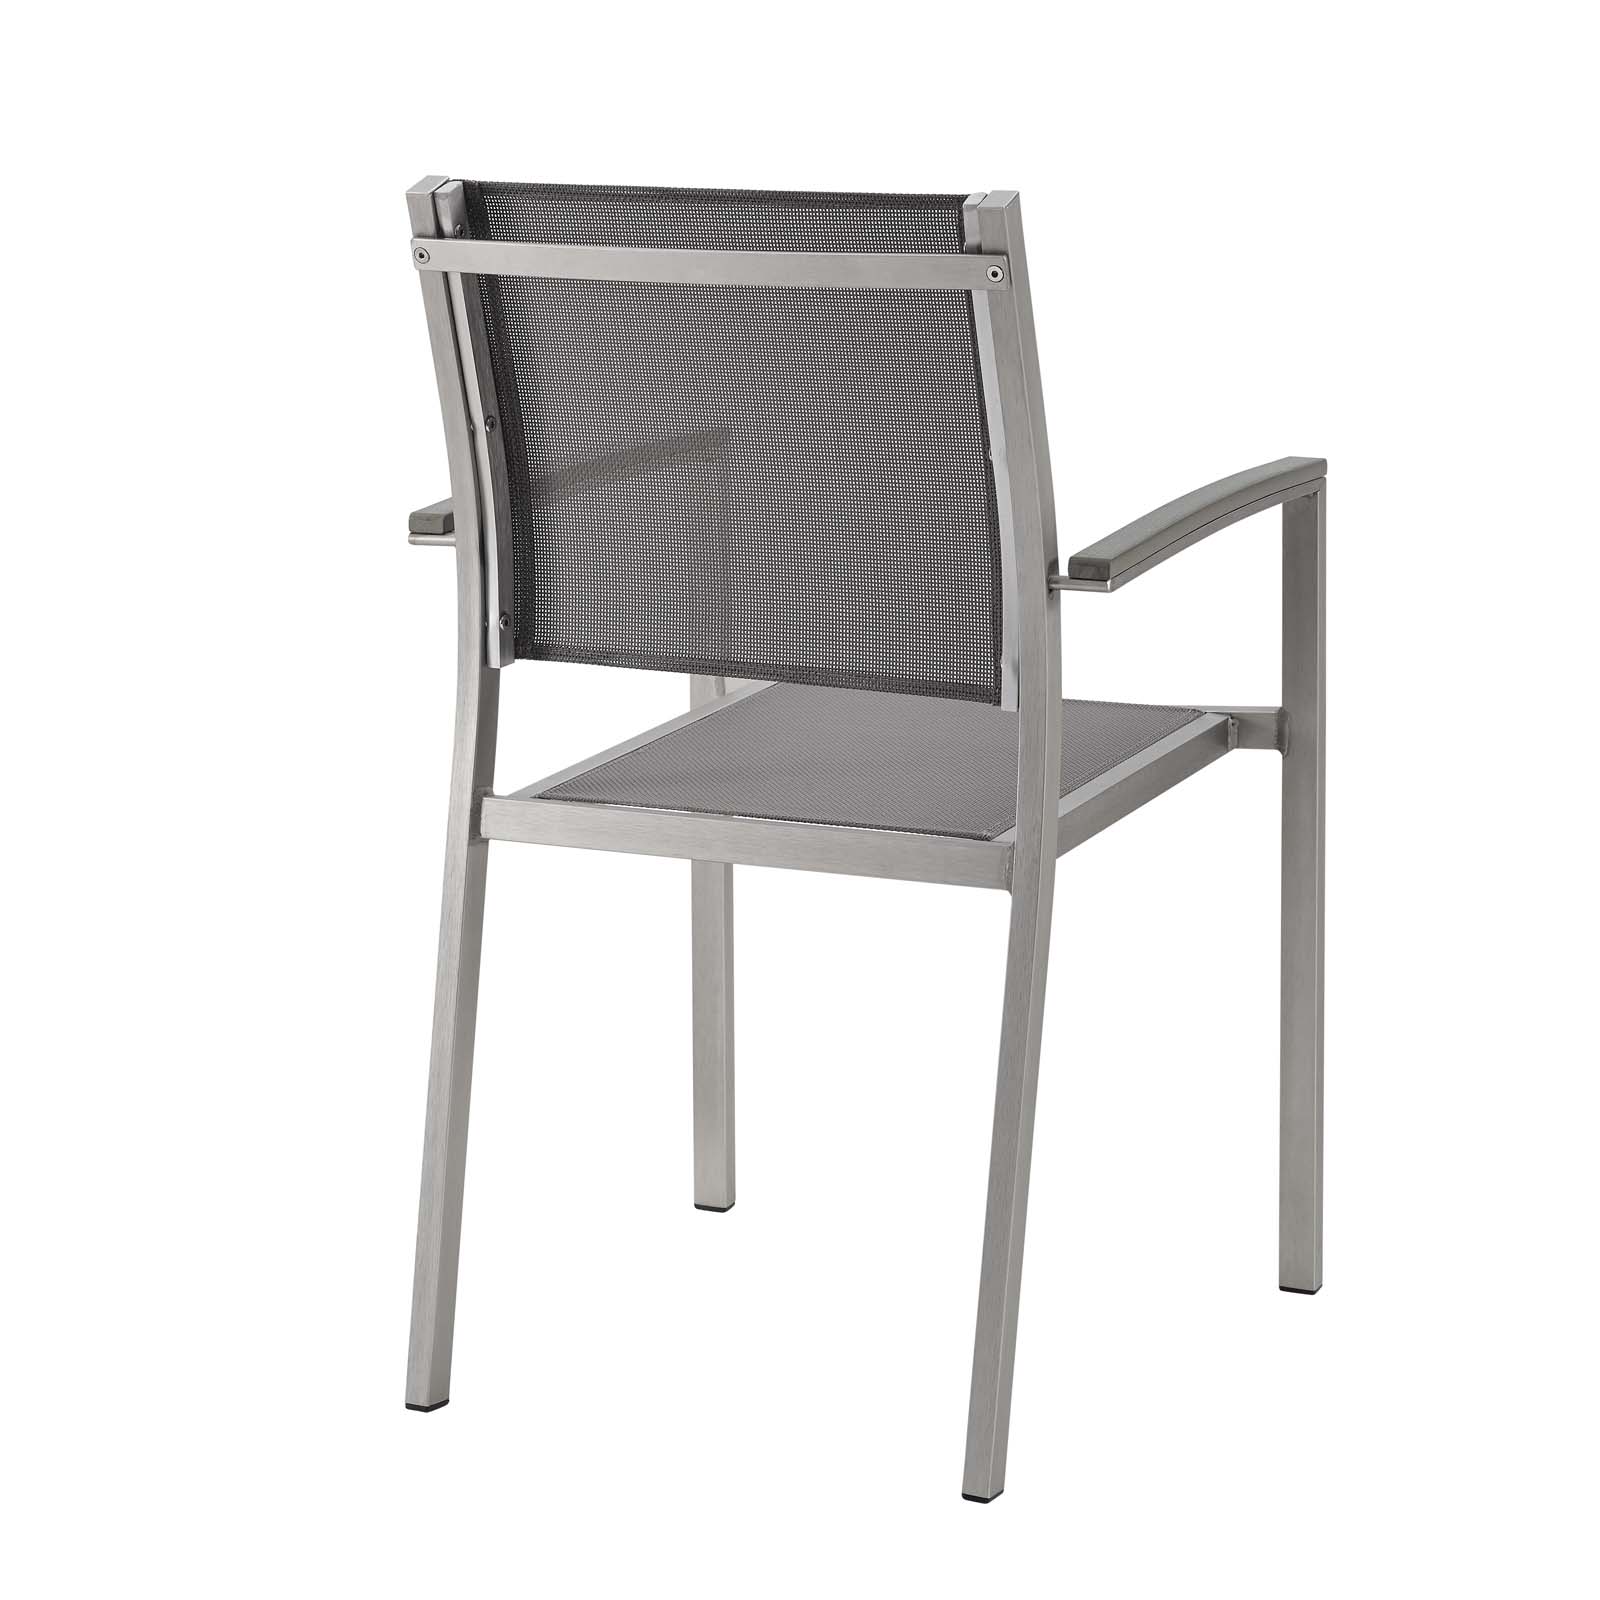 Modern Contemporary Urban Design Outdoor Patio Balcony Garden Furniture Side Dining Chair, Aluminum Metal Steel, Grey Gray - image 3 of 4